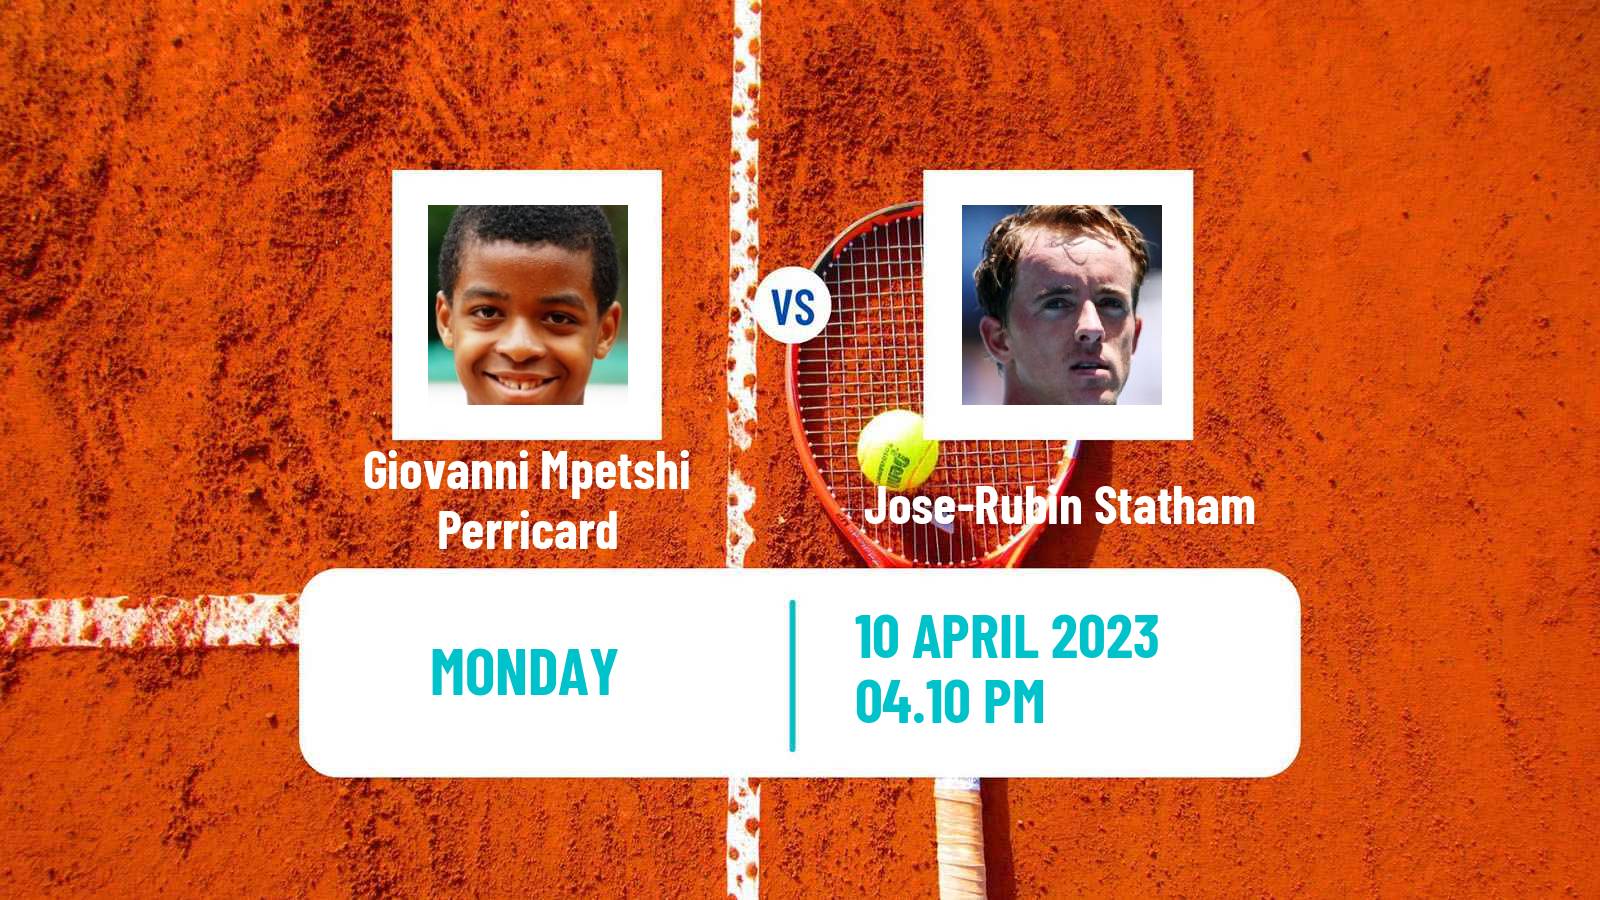 Tennis ATP Challenger Giovanni Mpetshi Perricard - Jose-Rubin Statham